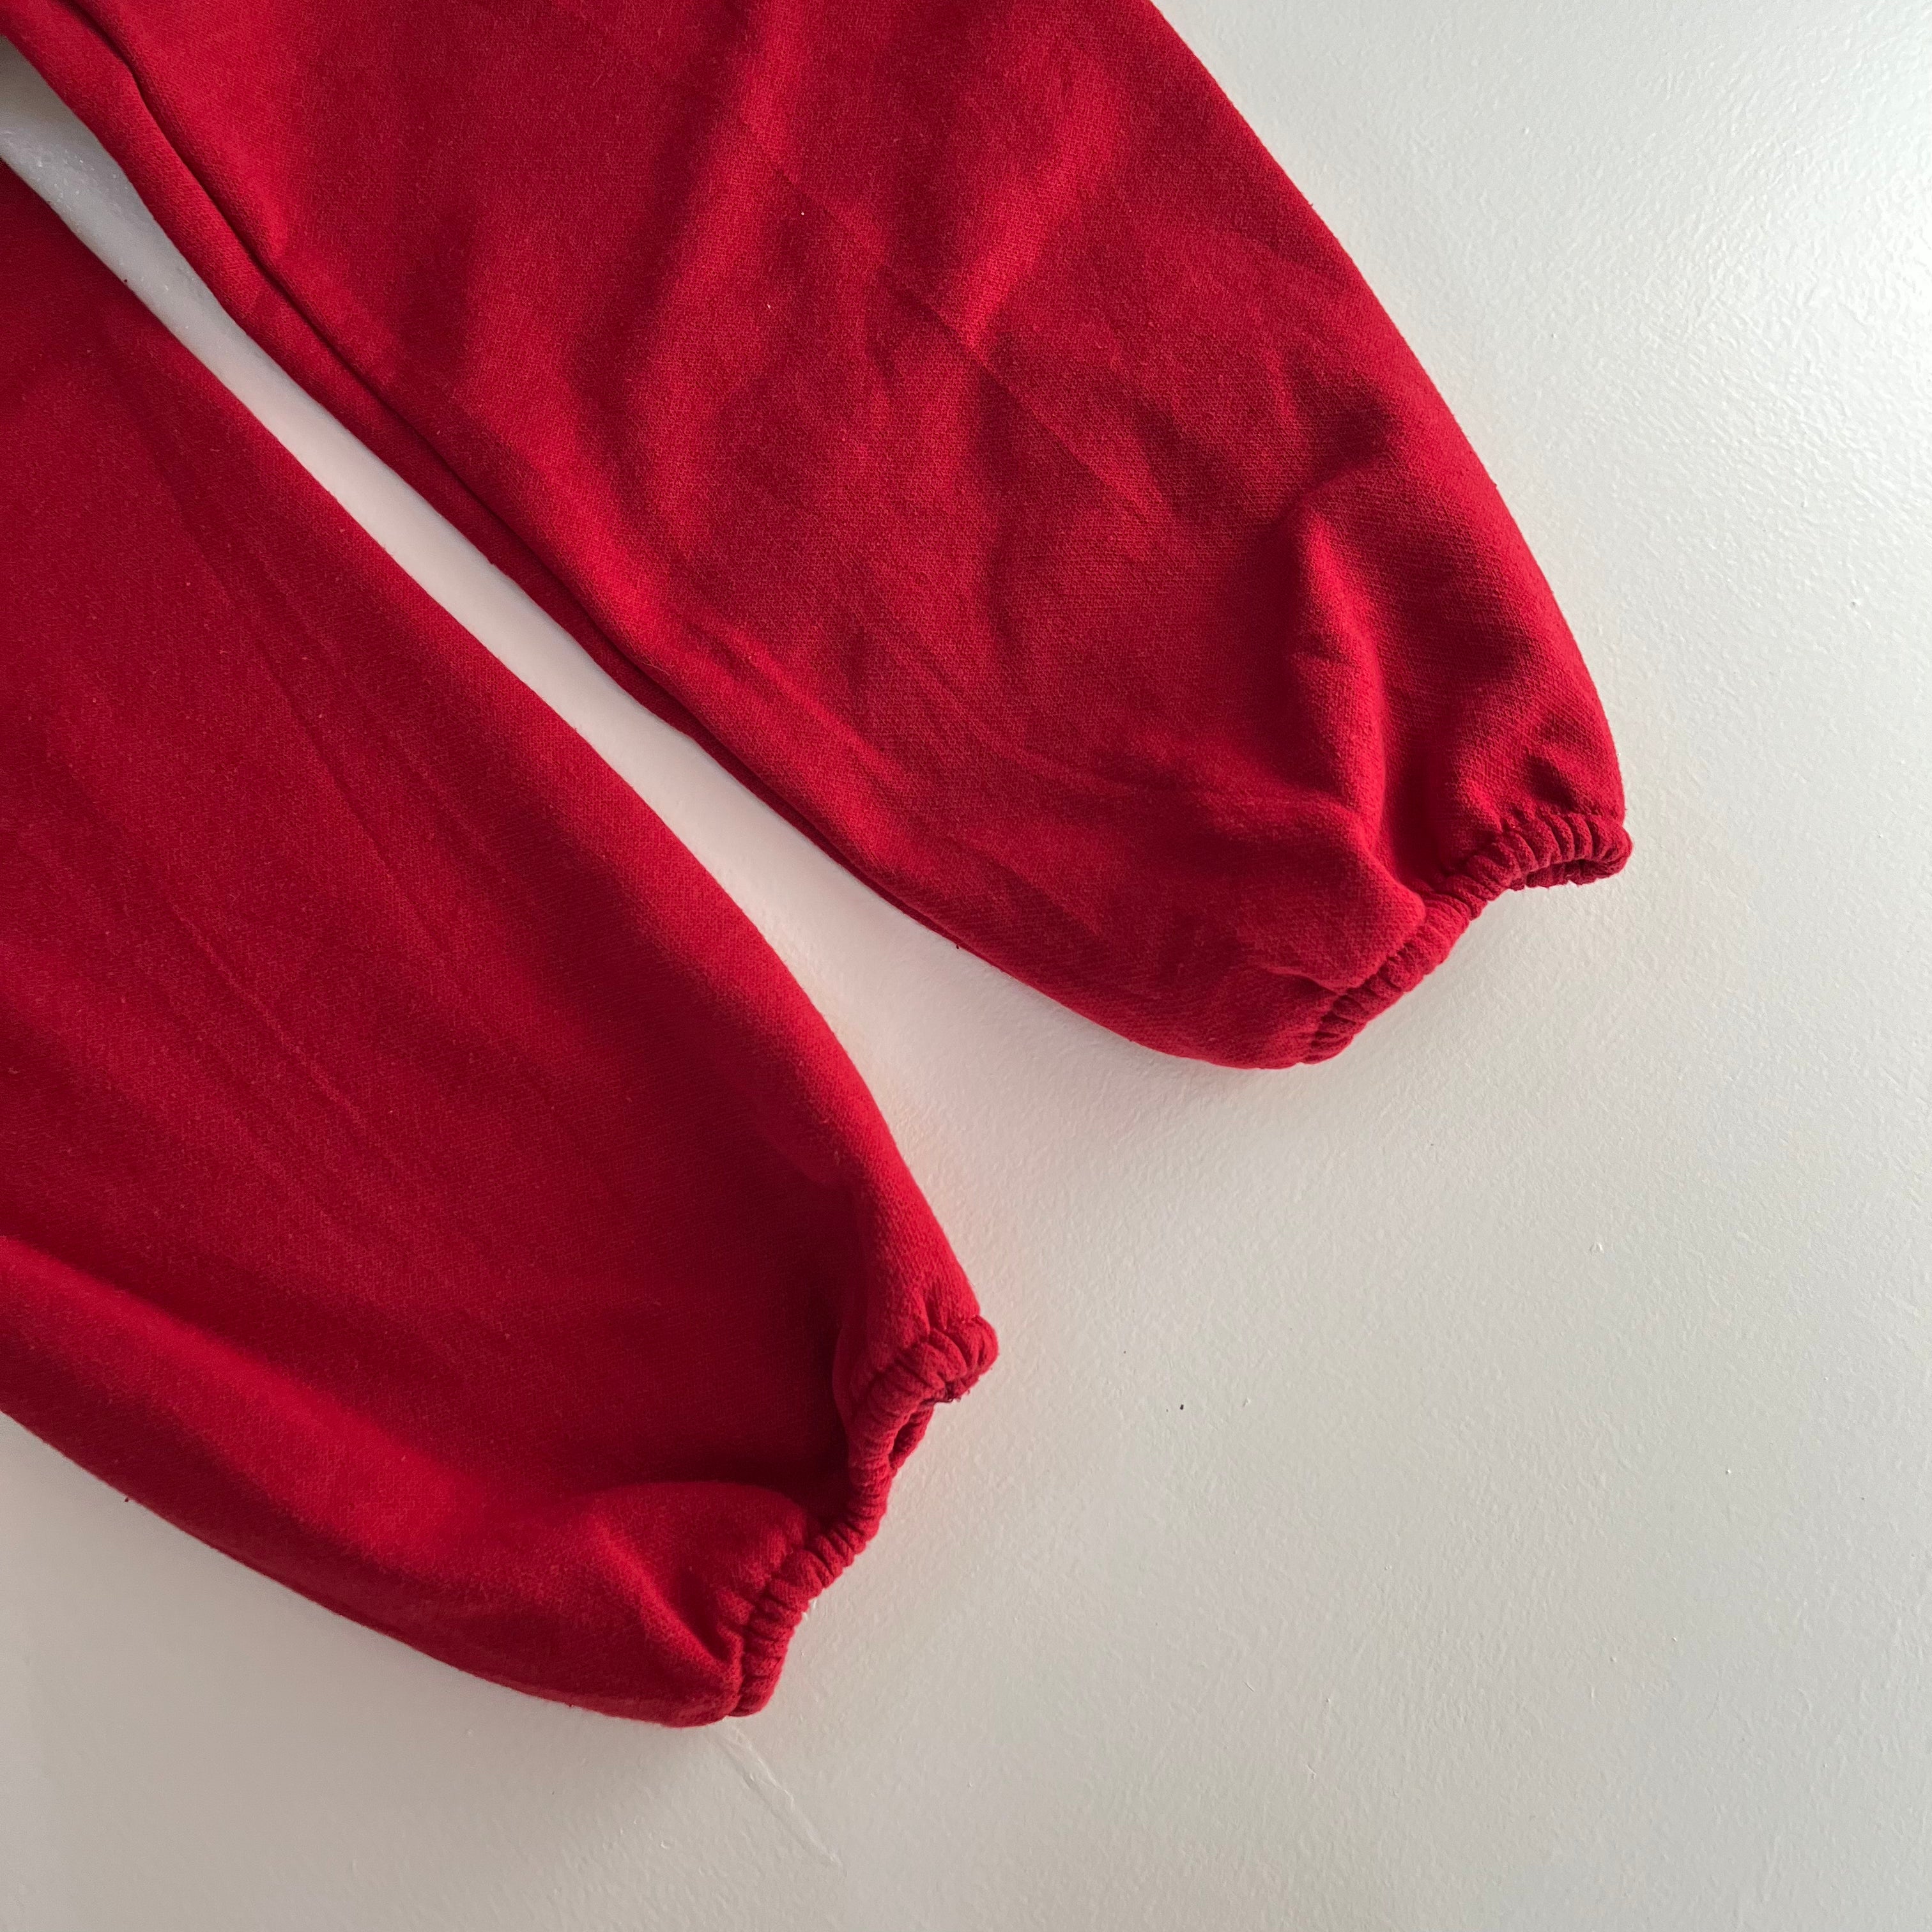 1980s Red Wine Colored Elastic Waist Sweatpants - USA MADE